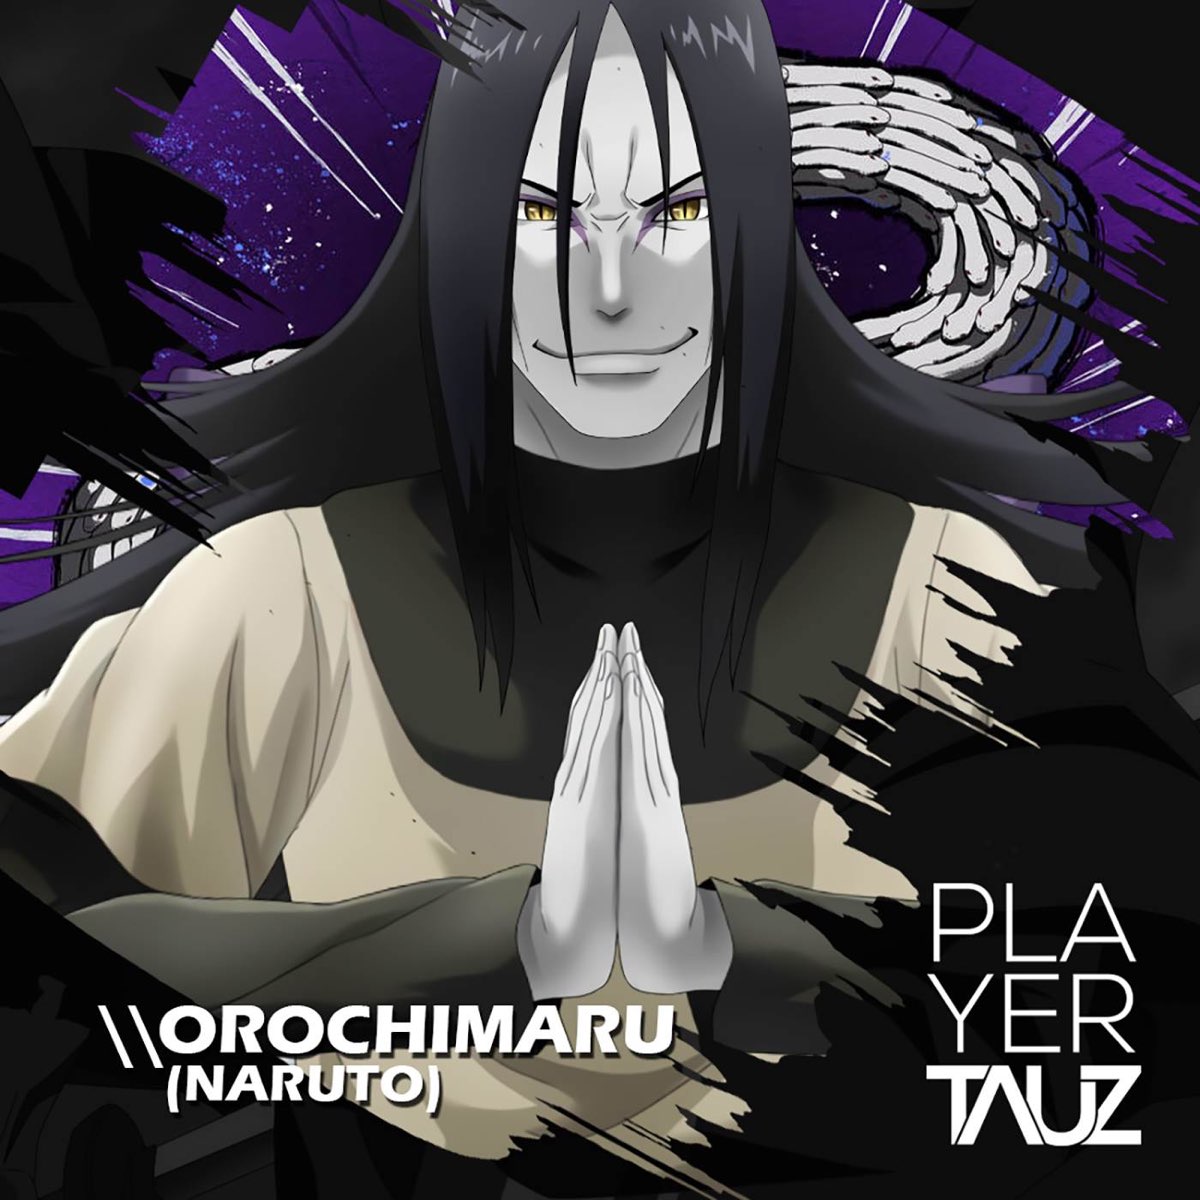 Orochimaru (Naruto) - Single by Tauz on Apple Music